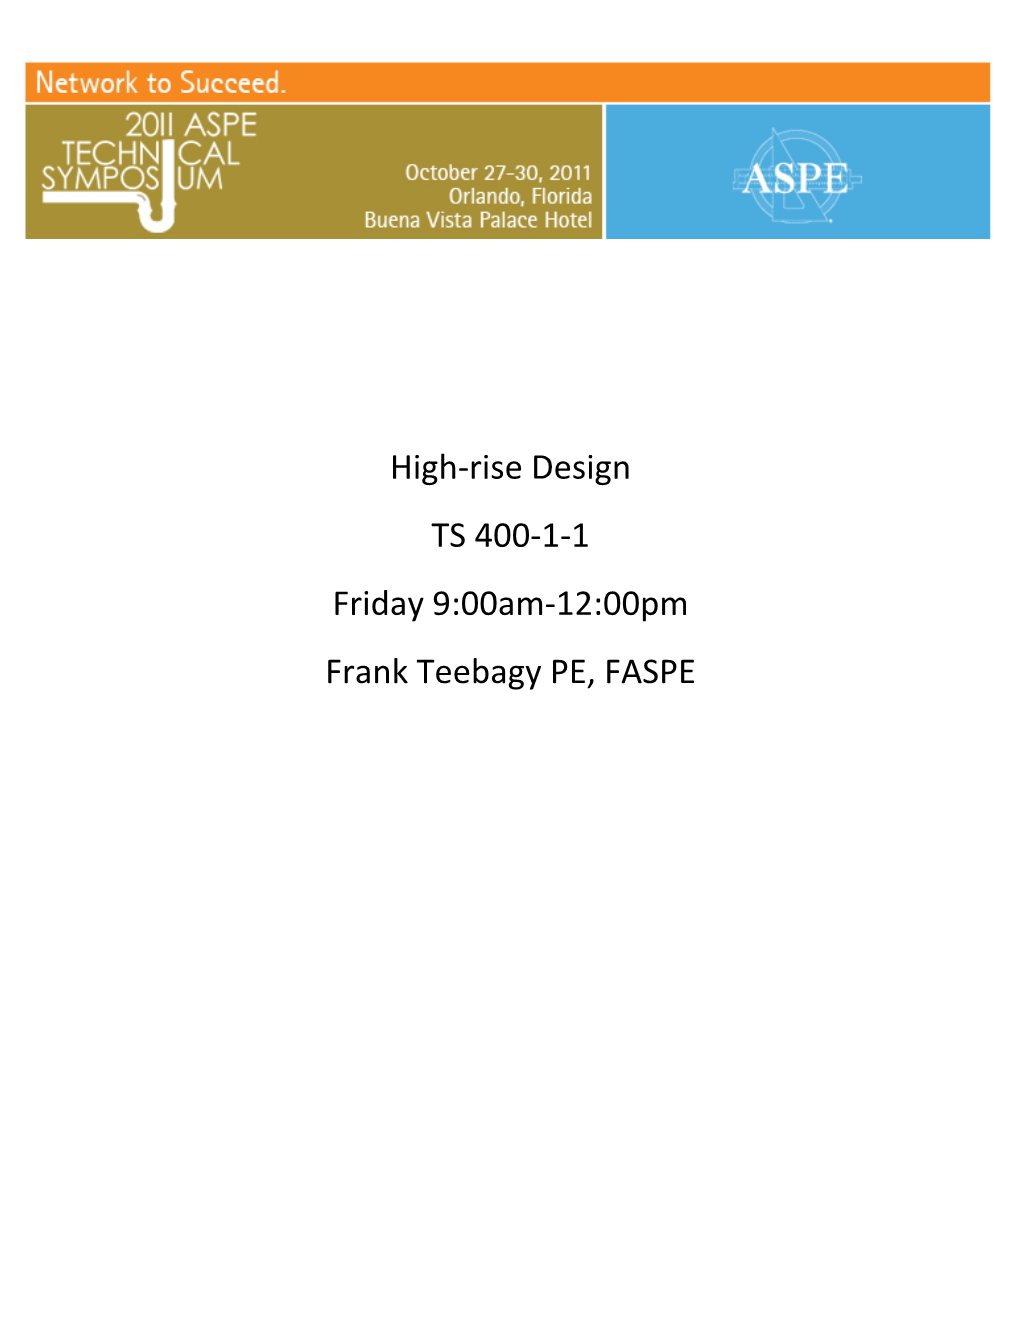 High-Rise Design TS 400-1-1 Friday 9:00Am-12:00Pm Frank Teebagy